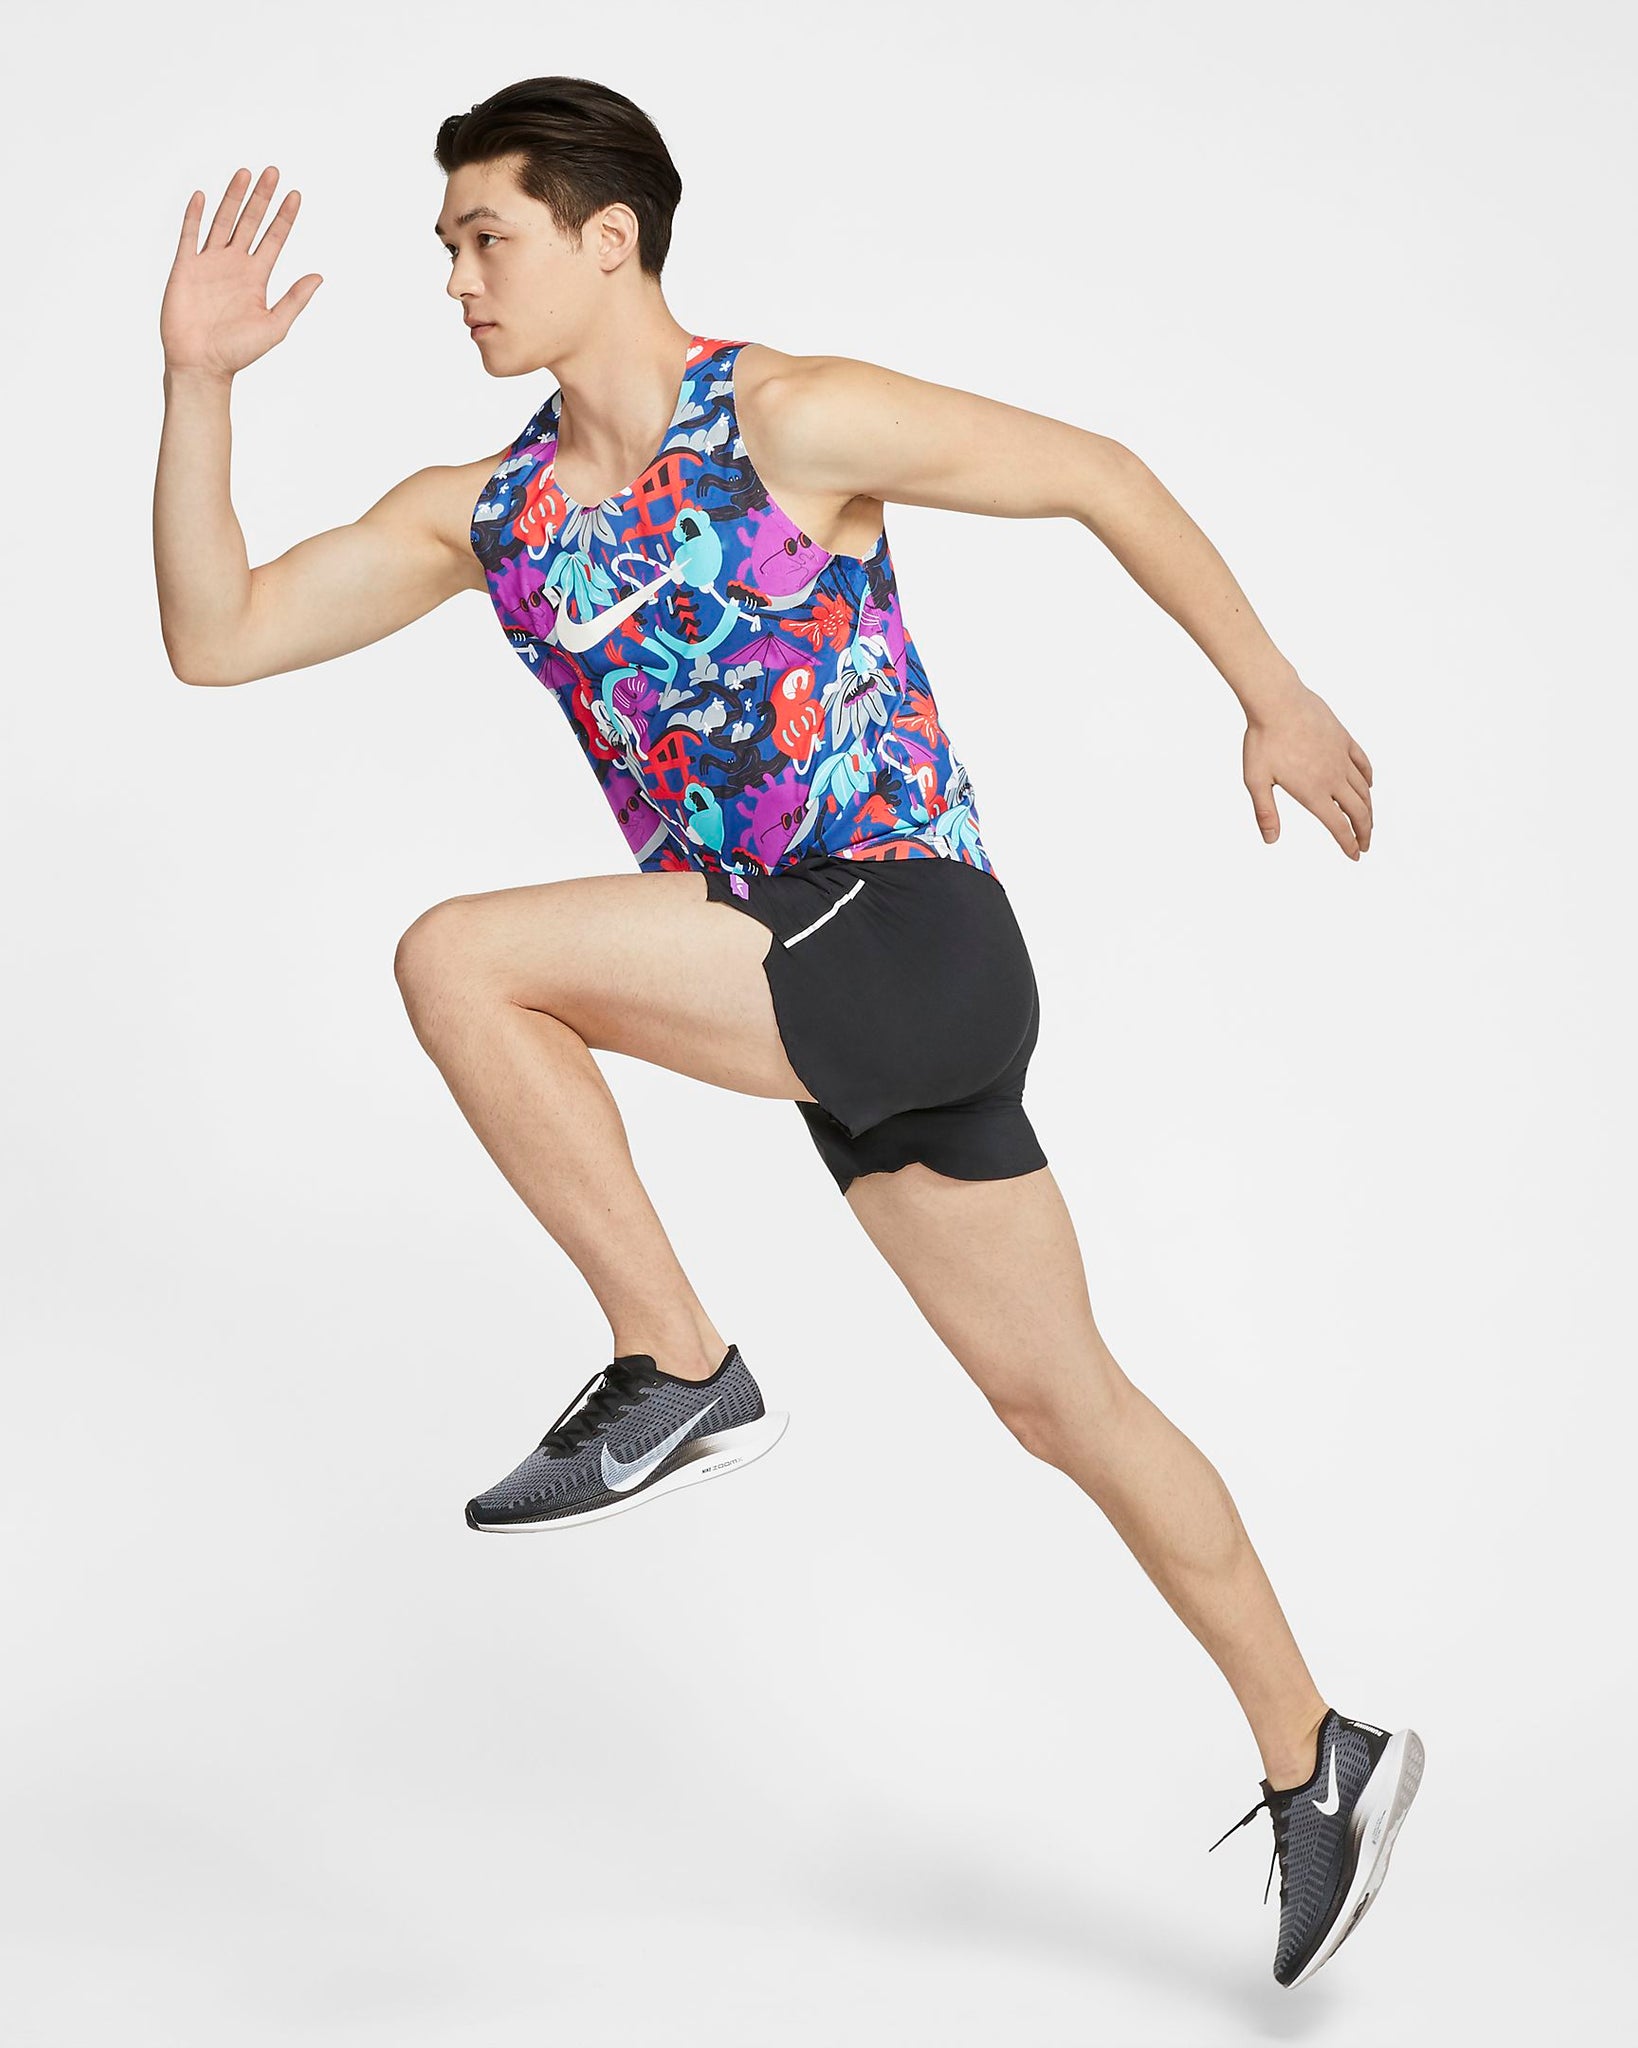 Nike Tokyo Running Pack